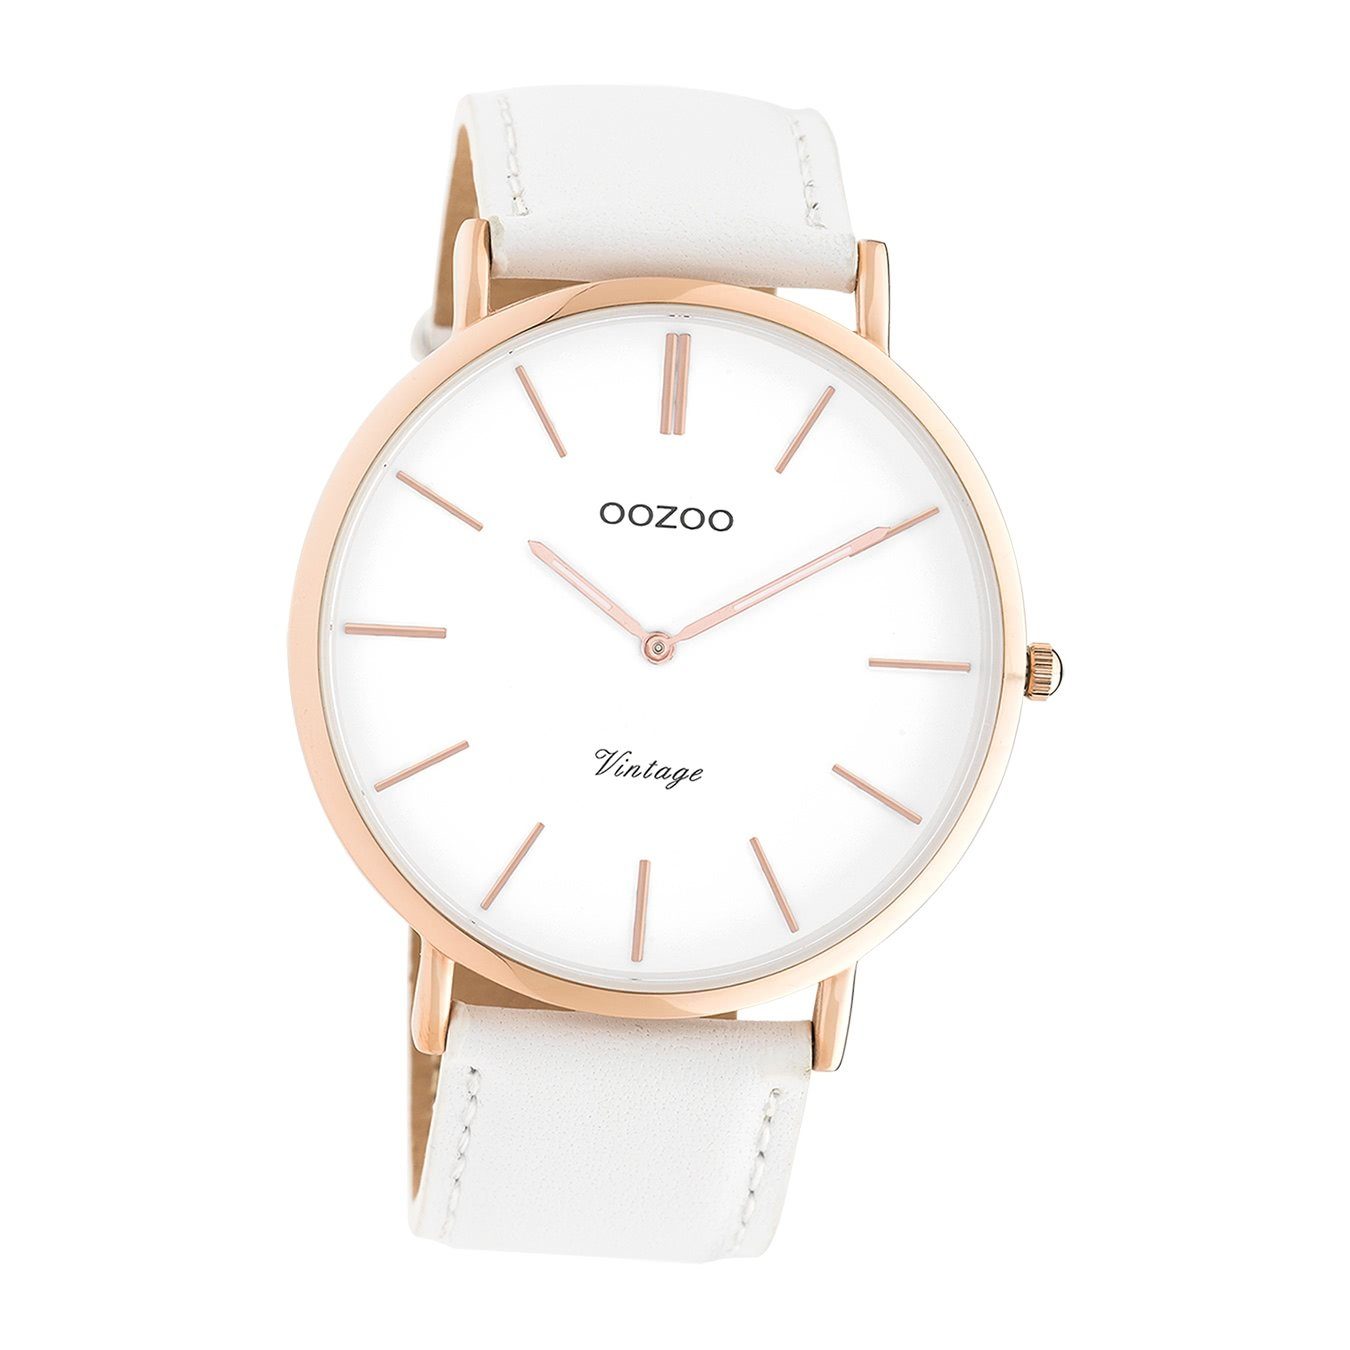 am beliebtesten OOZOO Quarzuhr Oozoo Damen Armbanduhr (Analoguhr), 44mm), Lederarmband OOZOO groß Damenuhr rund, (ca. Fashion weiß, Vintage